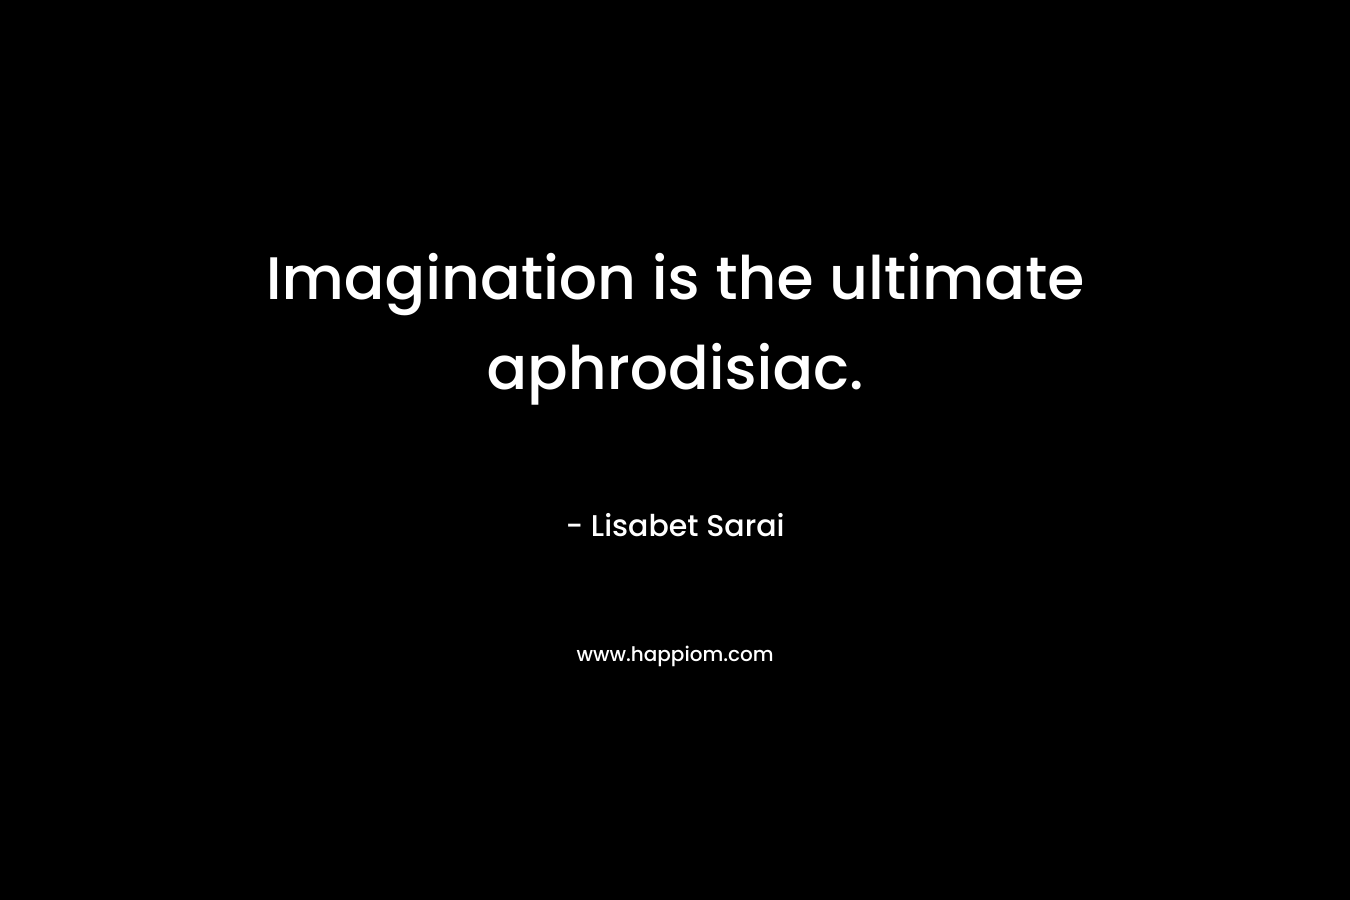 Imagination is the ultimate aphrodisiac.